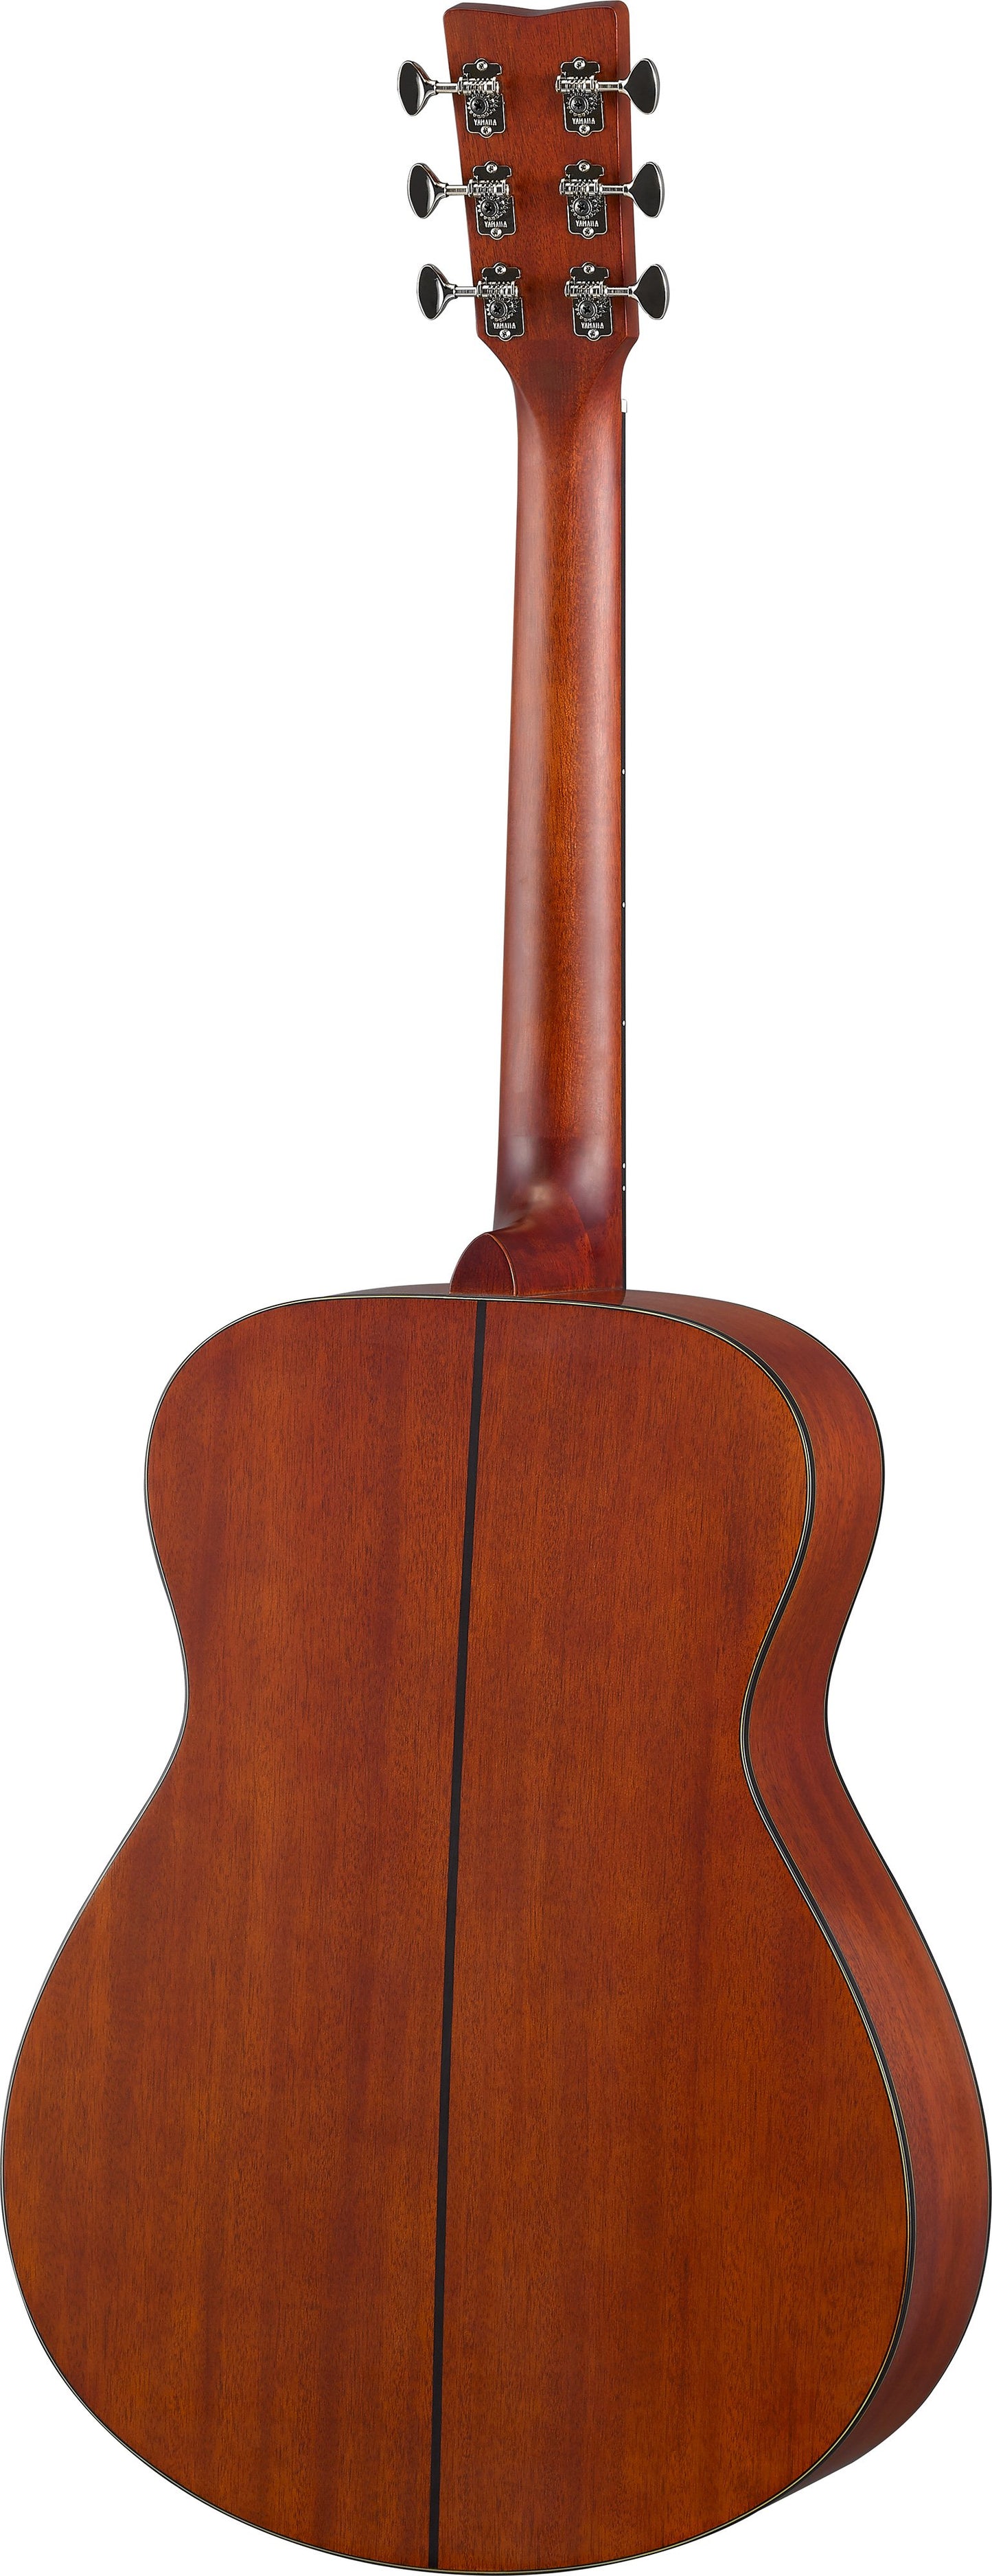 Yamaha FS-5 Acoustic Guitar